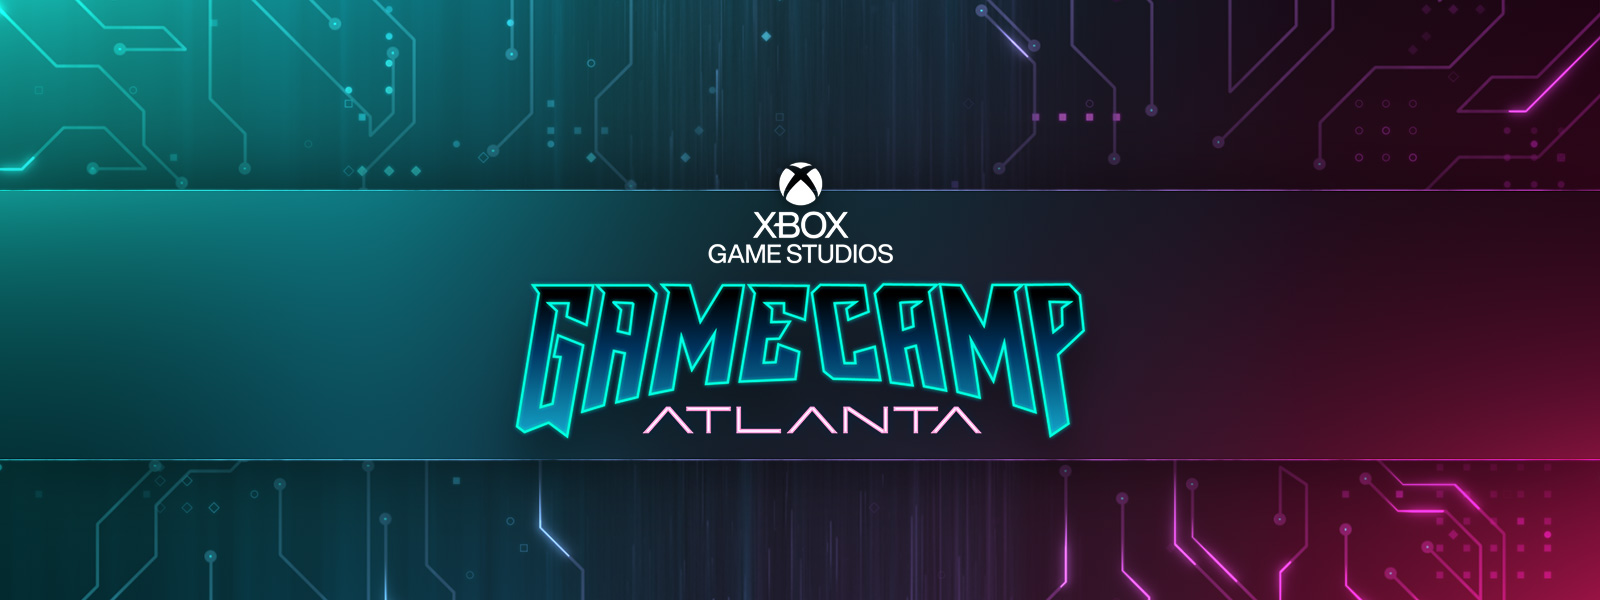 Xbox Game Studios Game Camp Atlanta Logo